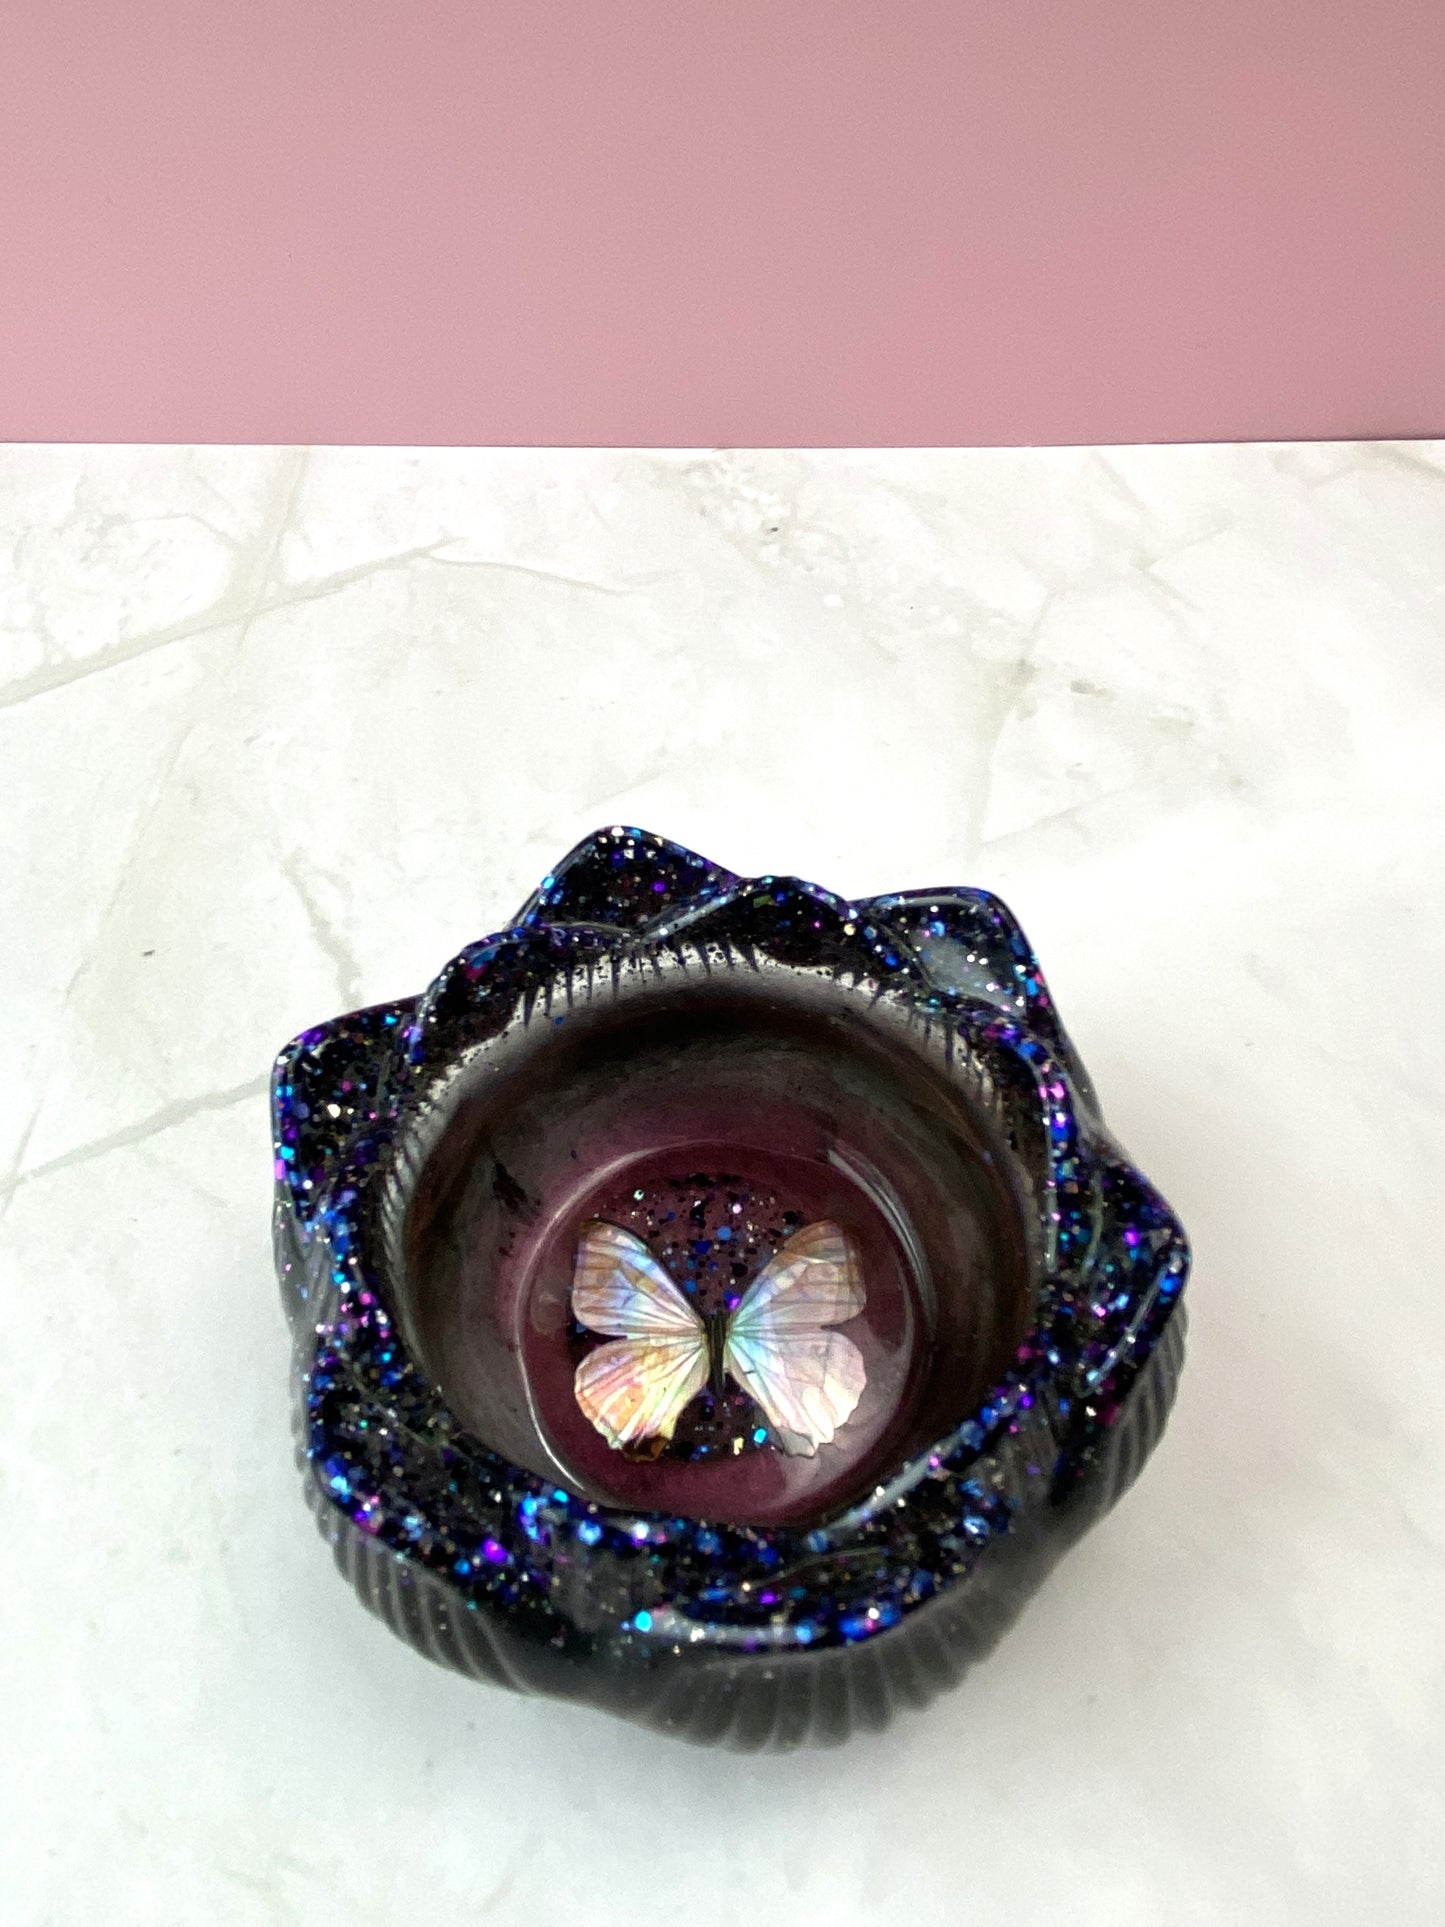 Black Cherry Pearl & Black Glitter Butterfly Lotus Candle Holder | Handmade Home Decor